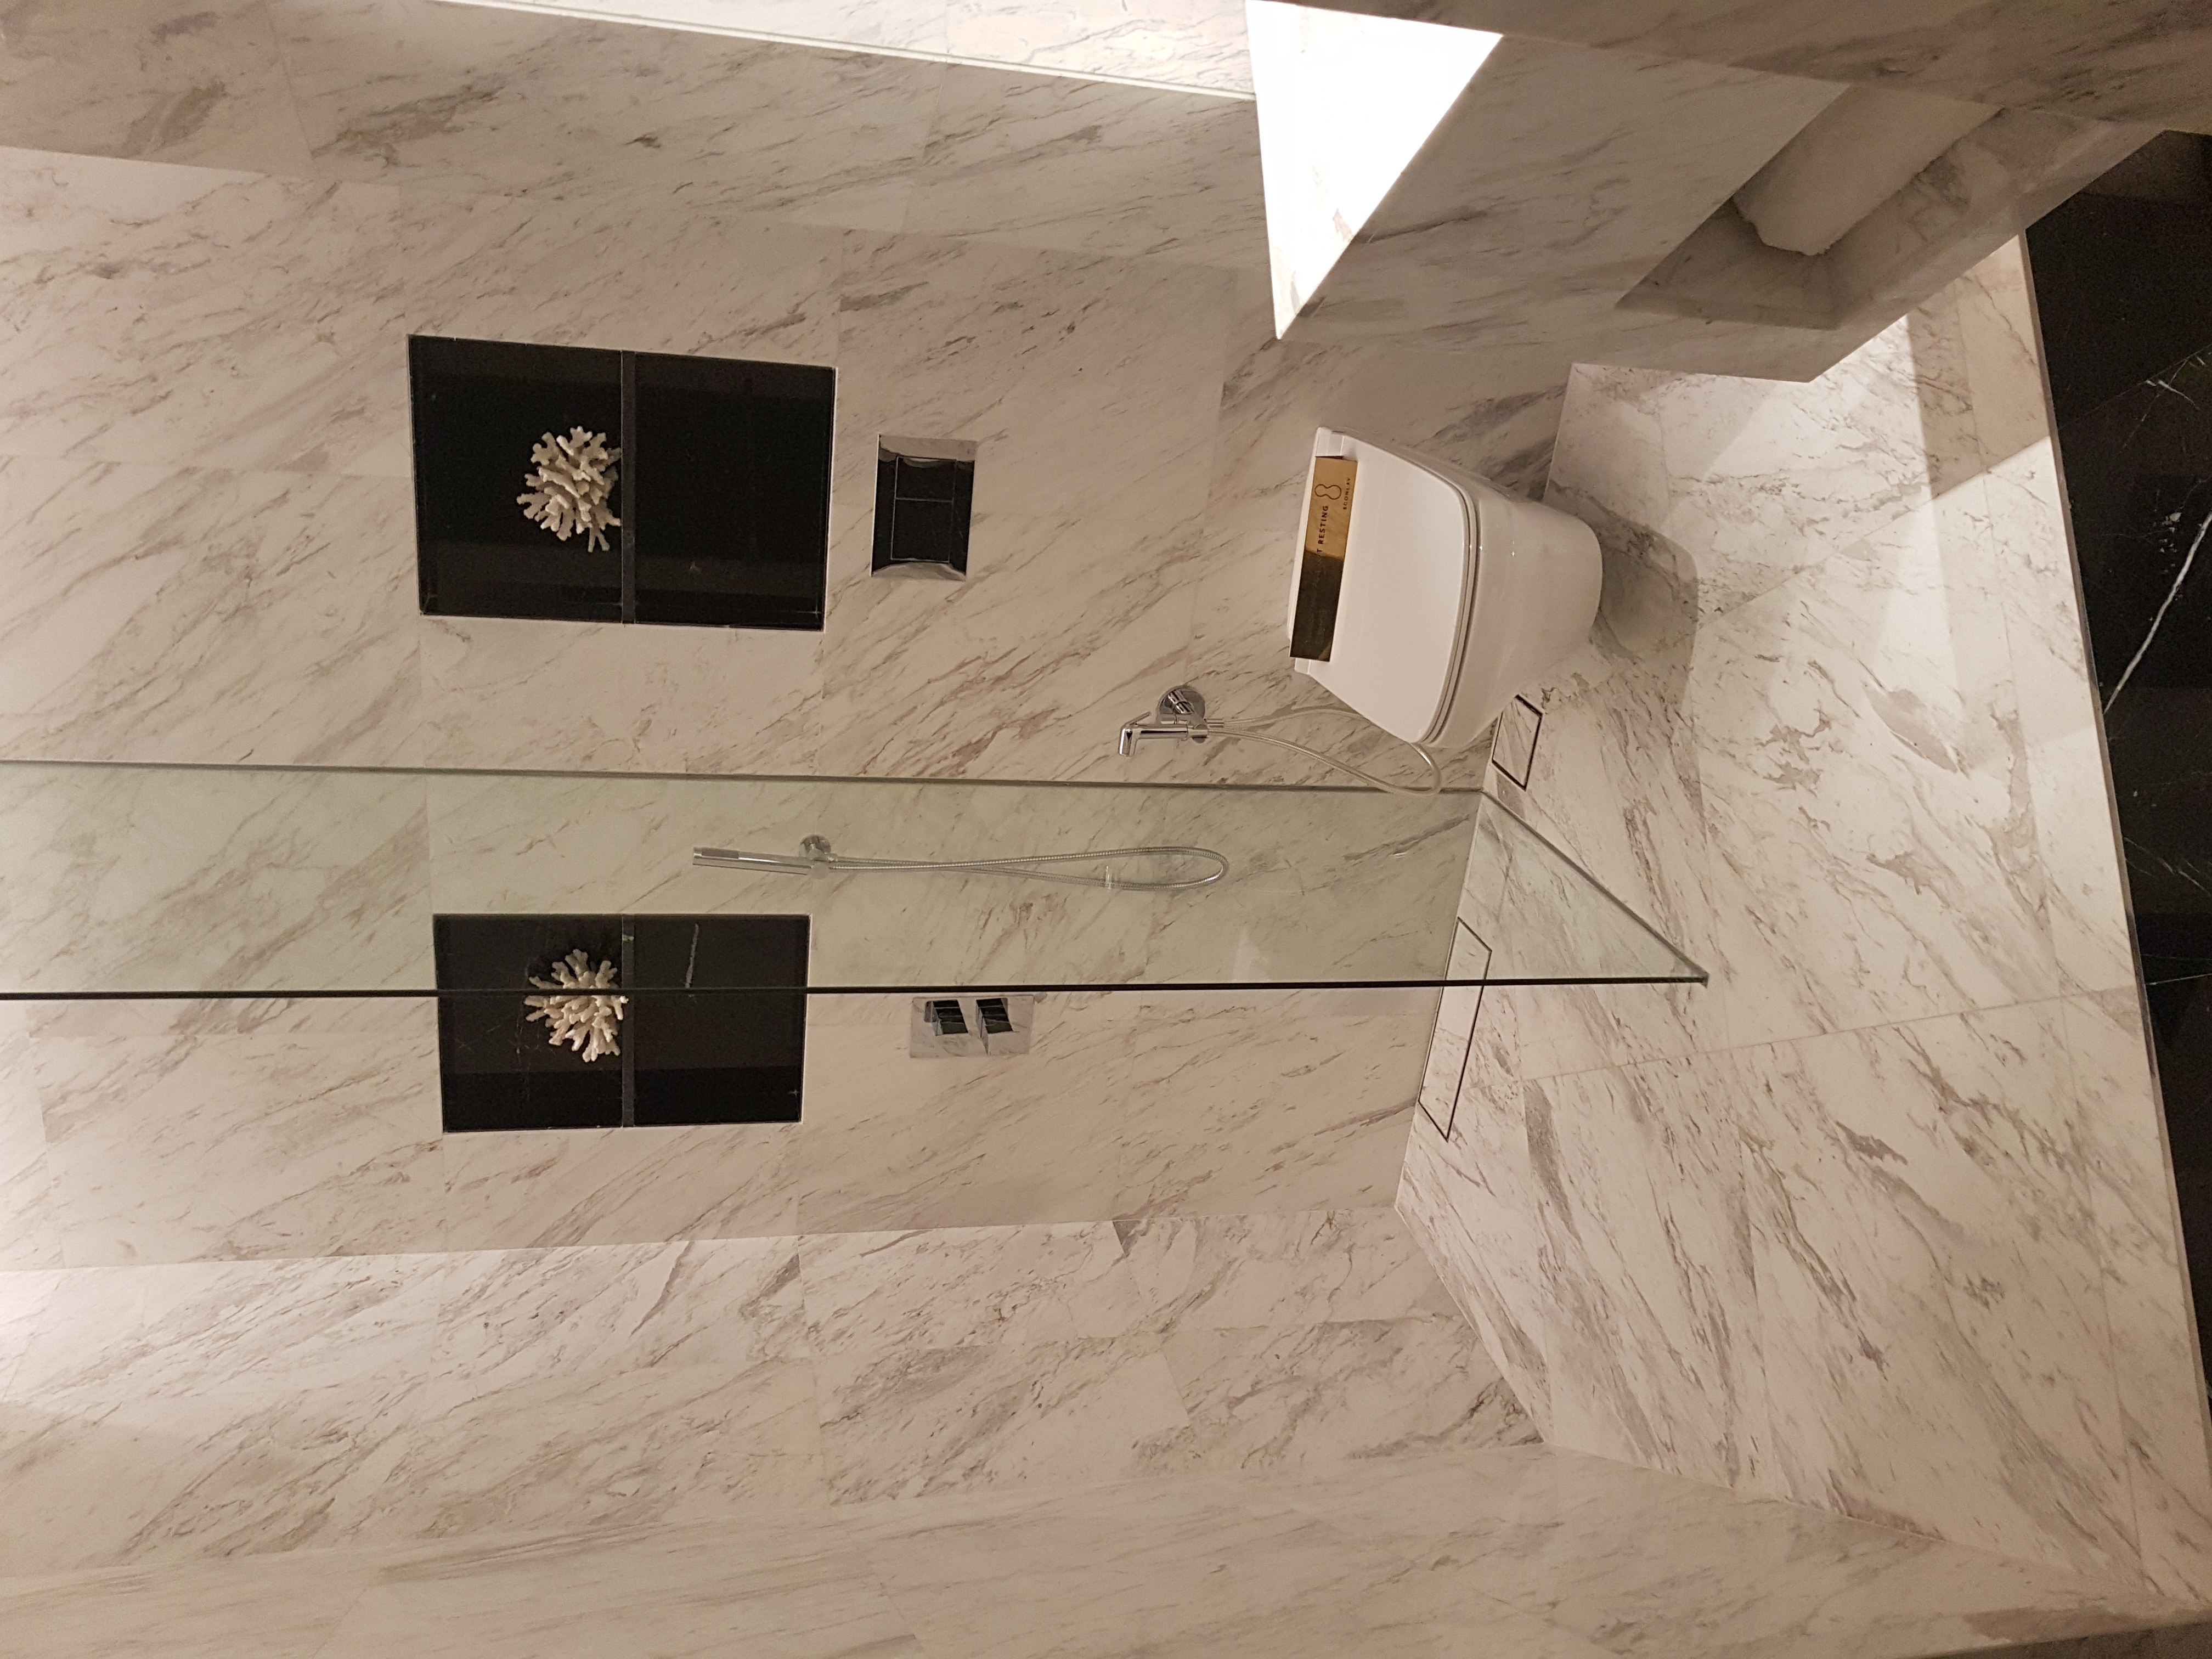 Gallery - Bathroom | Express Marble Sdn Bhd | Malaysia | Marble, Granite, Natural Stone, Interior Design